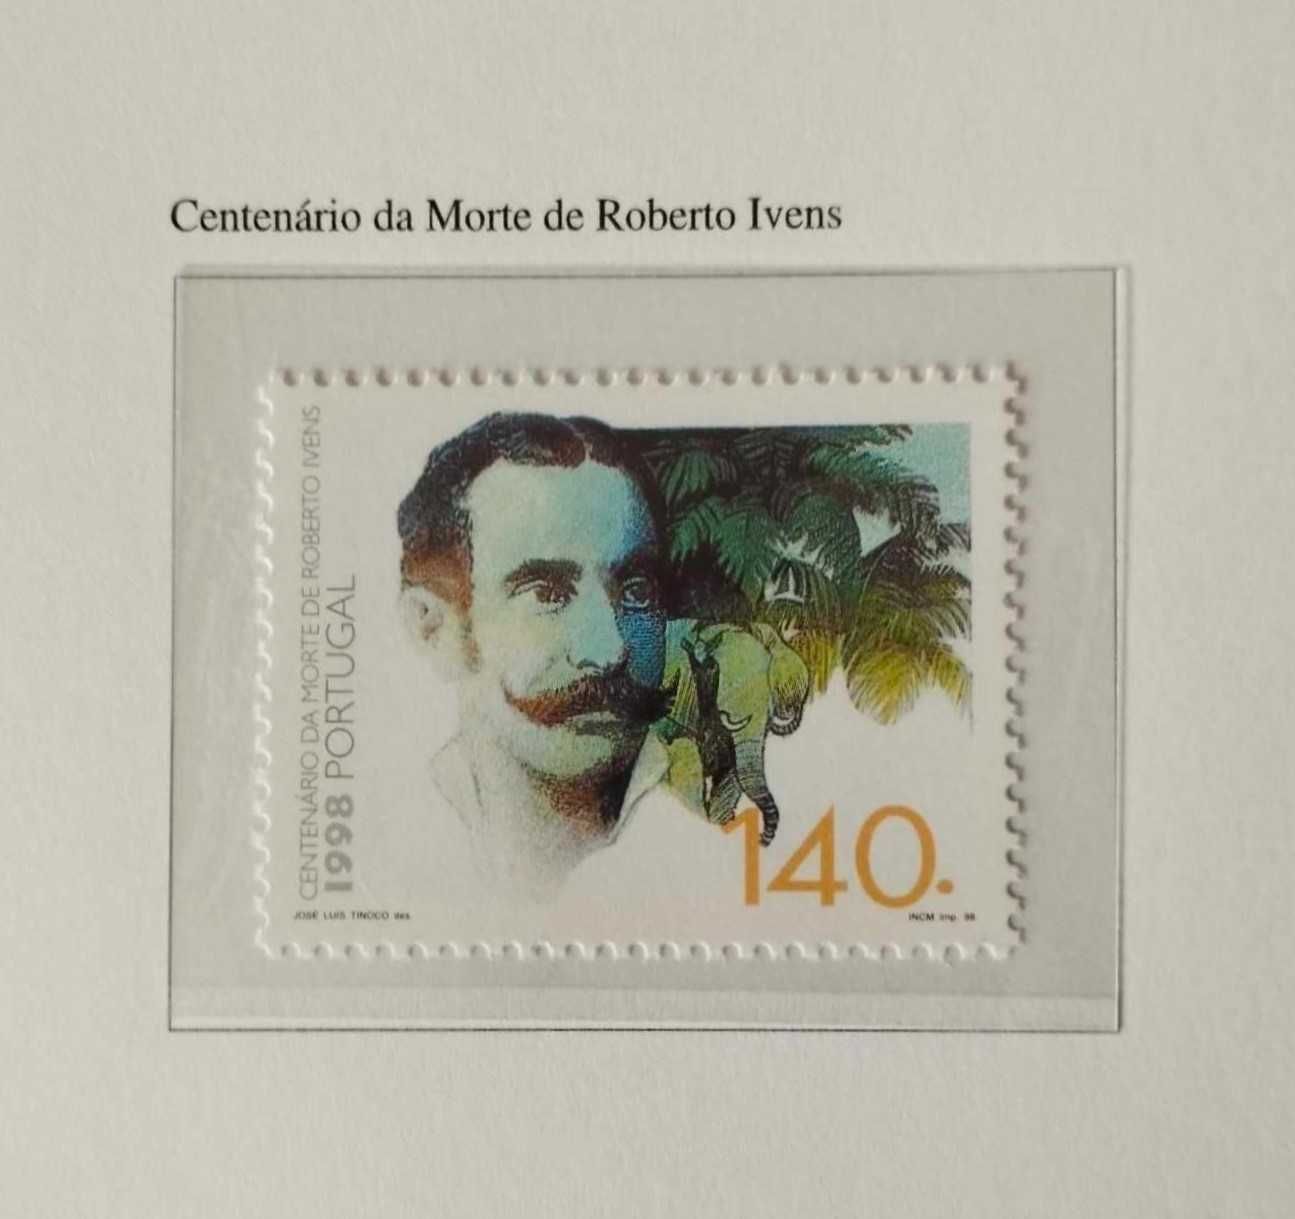 Série de Selos Centenario da Morte de Roberto Ivens - 1998